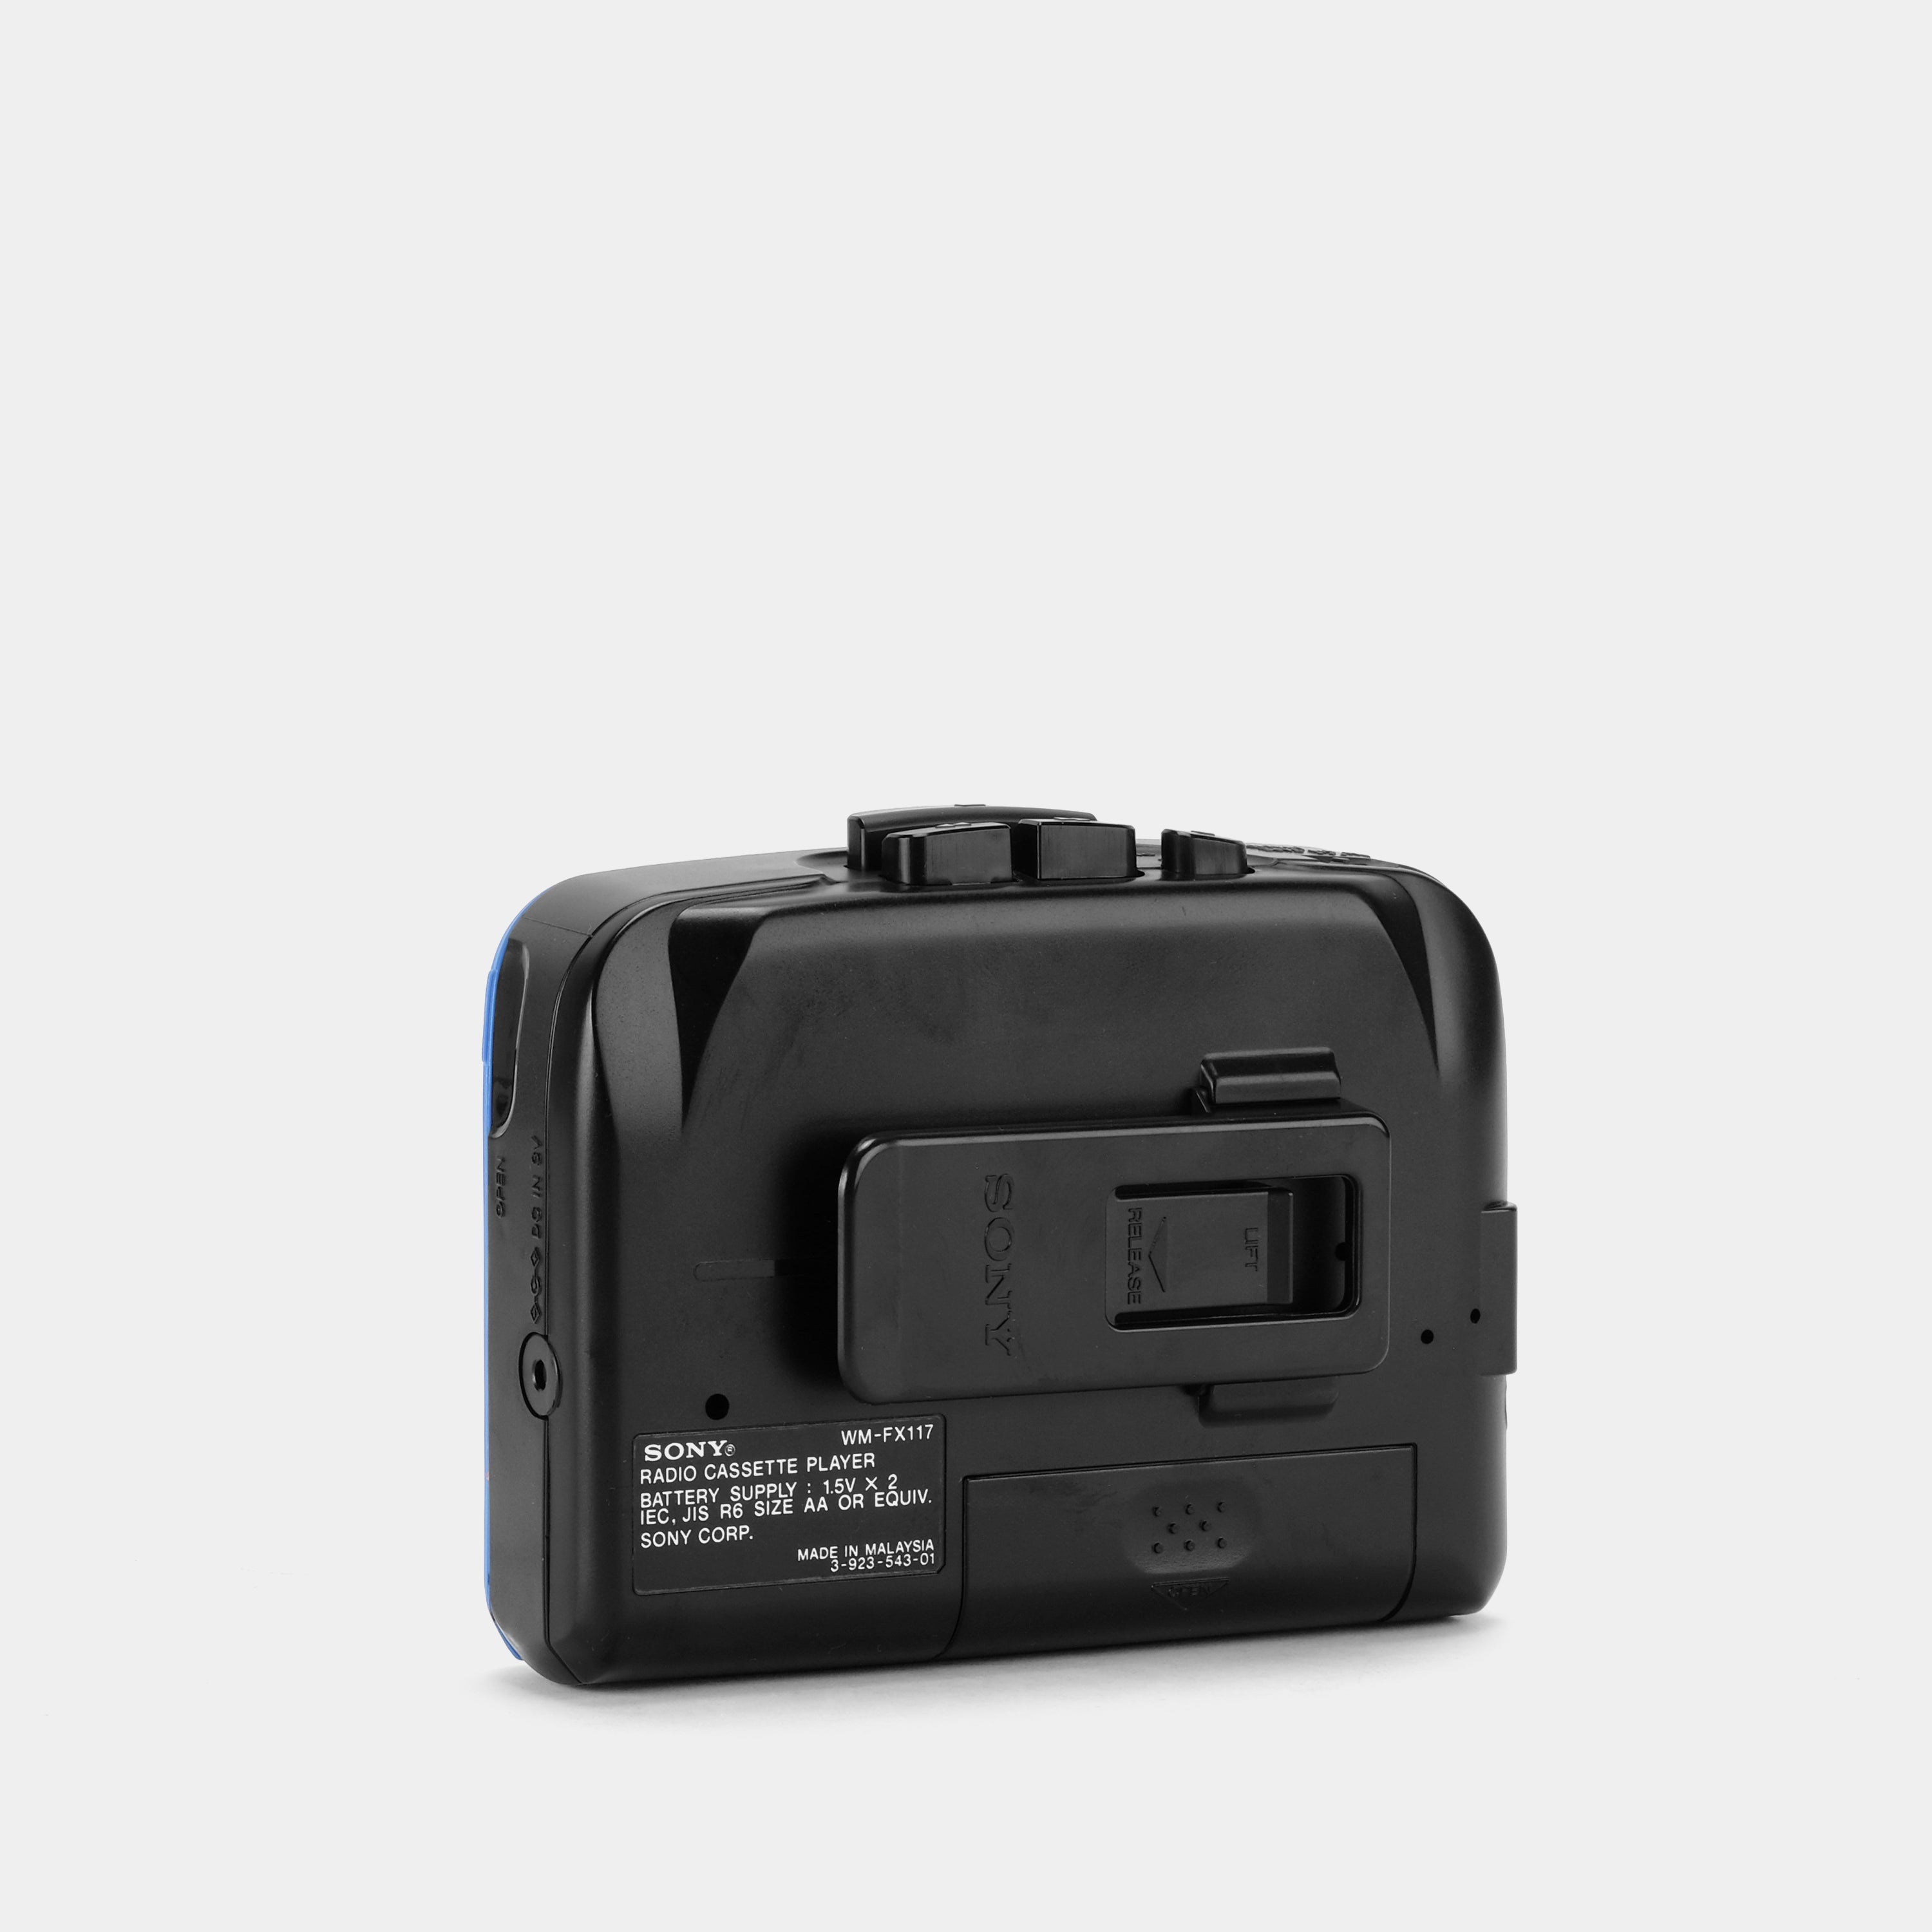 Sony Walkman WM-FX117 AM/FM Blue Portable Cassette Player